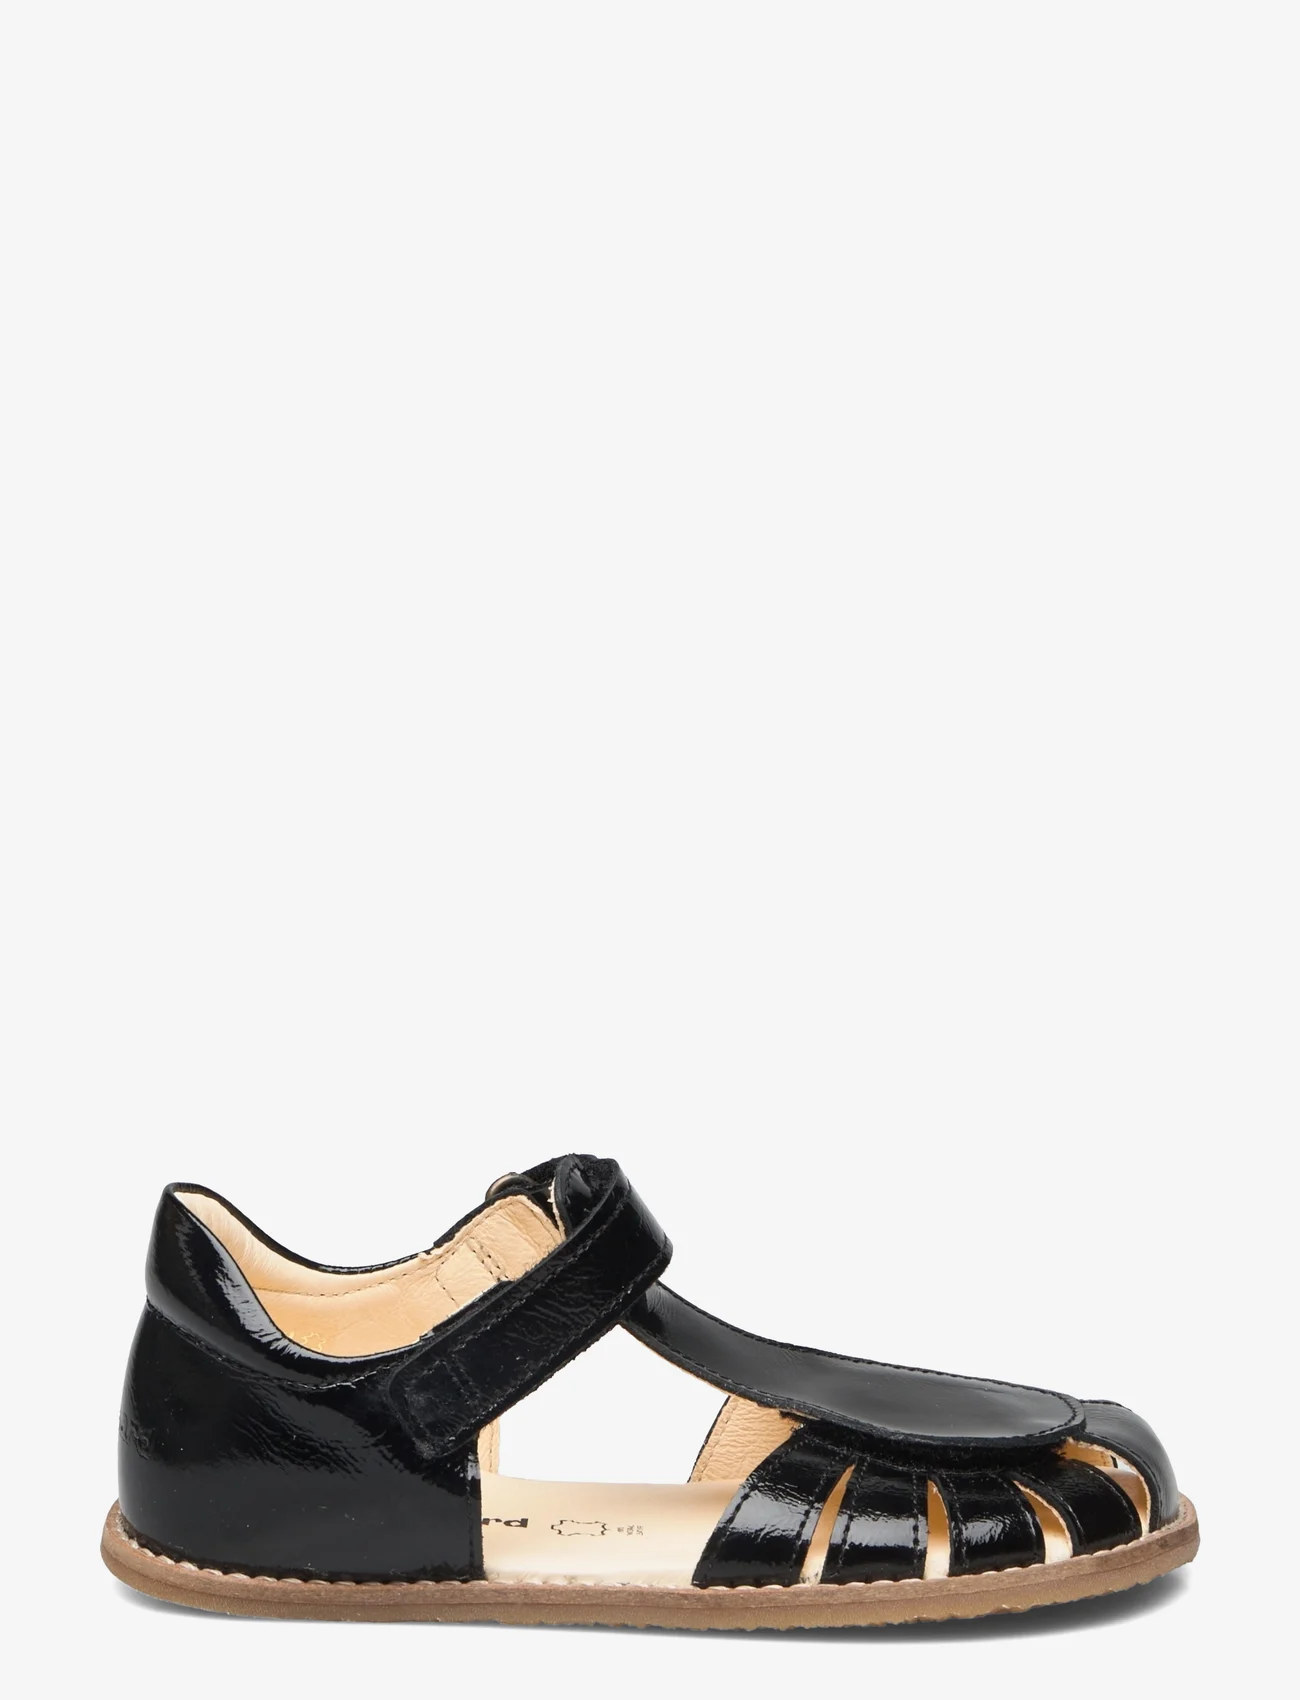 Bundgaard - Silja - spring shoes - black - 1